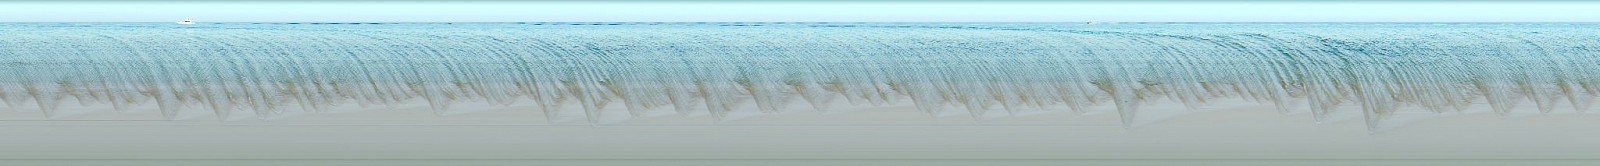 Jay Mark Johnson, COZUMEL WAVES #25, 2009 Cozumel MX
archival pigment on paper, mounted on aluminum, 40 x 384 in. (101.6 x 975.4 cm)